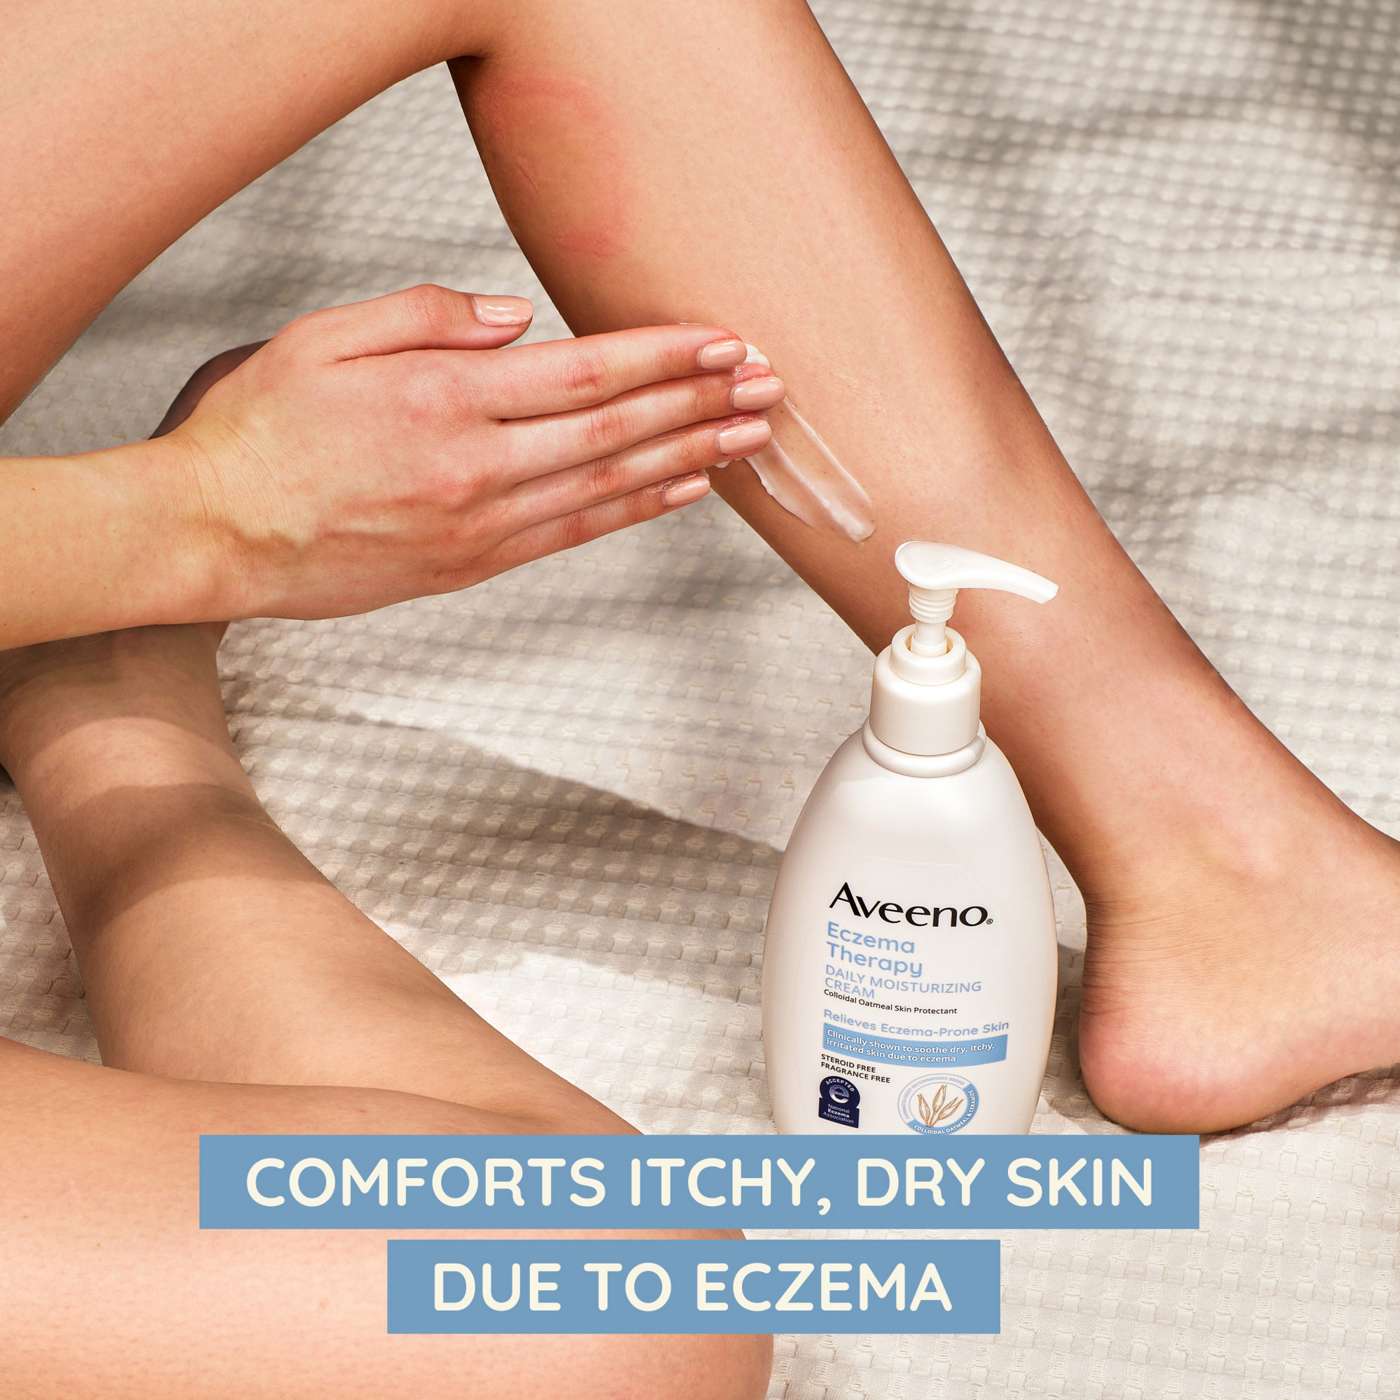 Aveeno Eczema Therapy Daily Moisturizing Cream; image 5 of 6